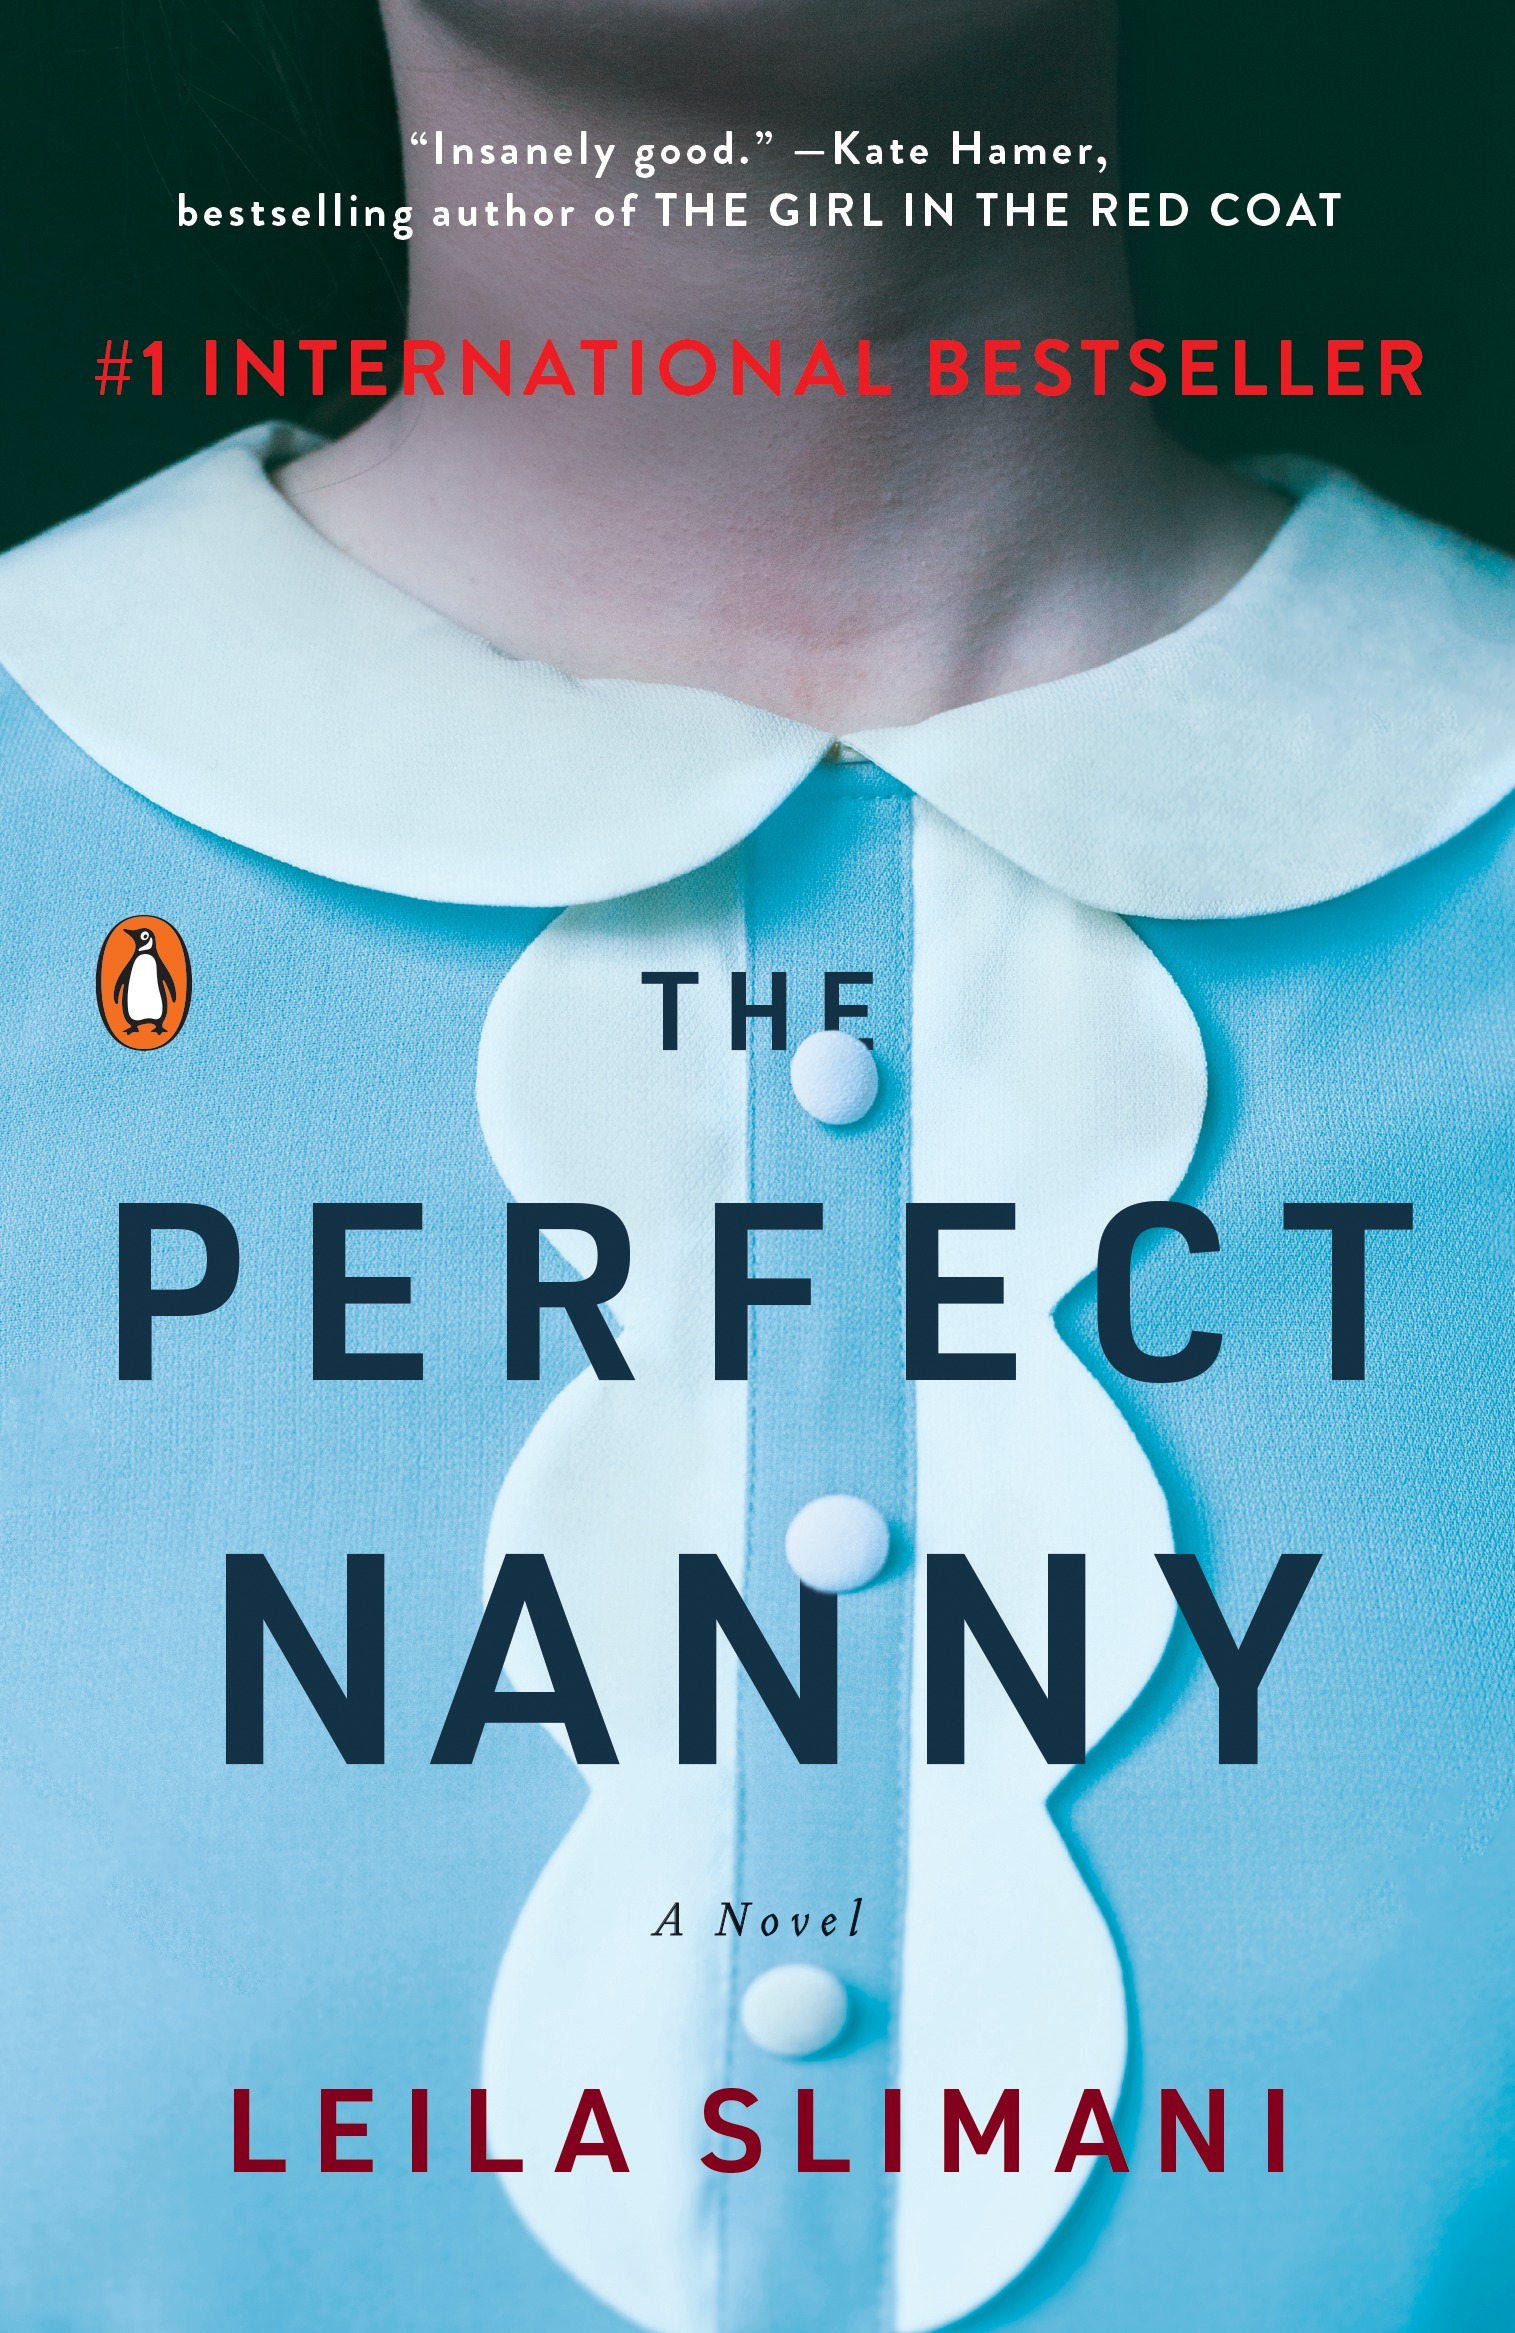 The Perfect Nanny: A Novel (AudiobookFormat, 2018)